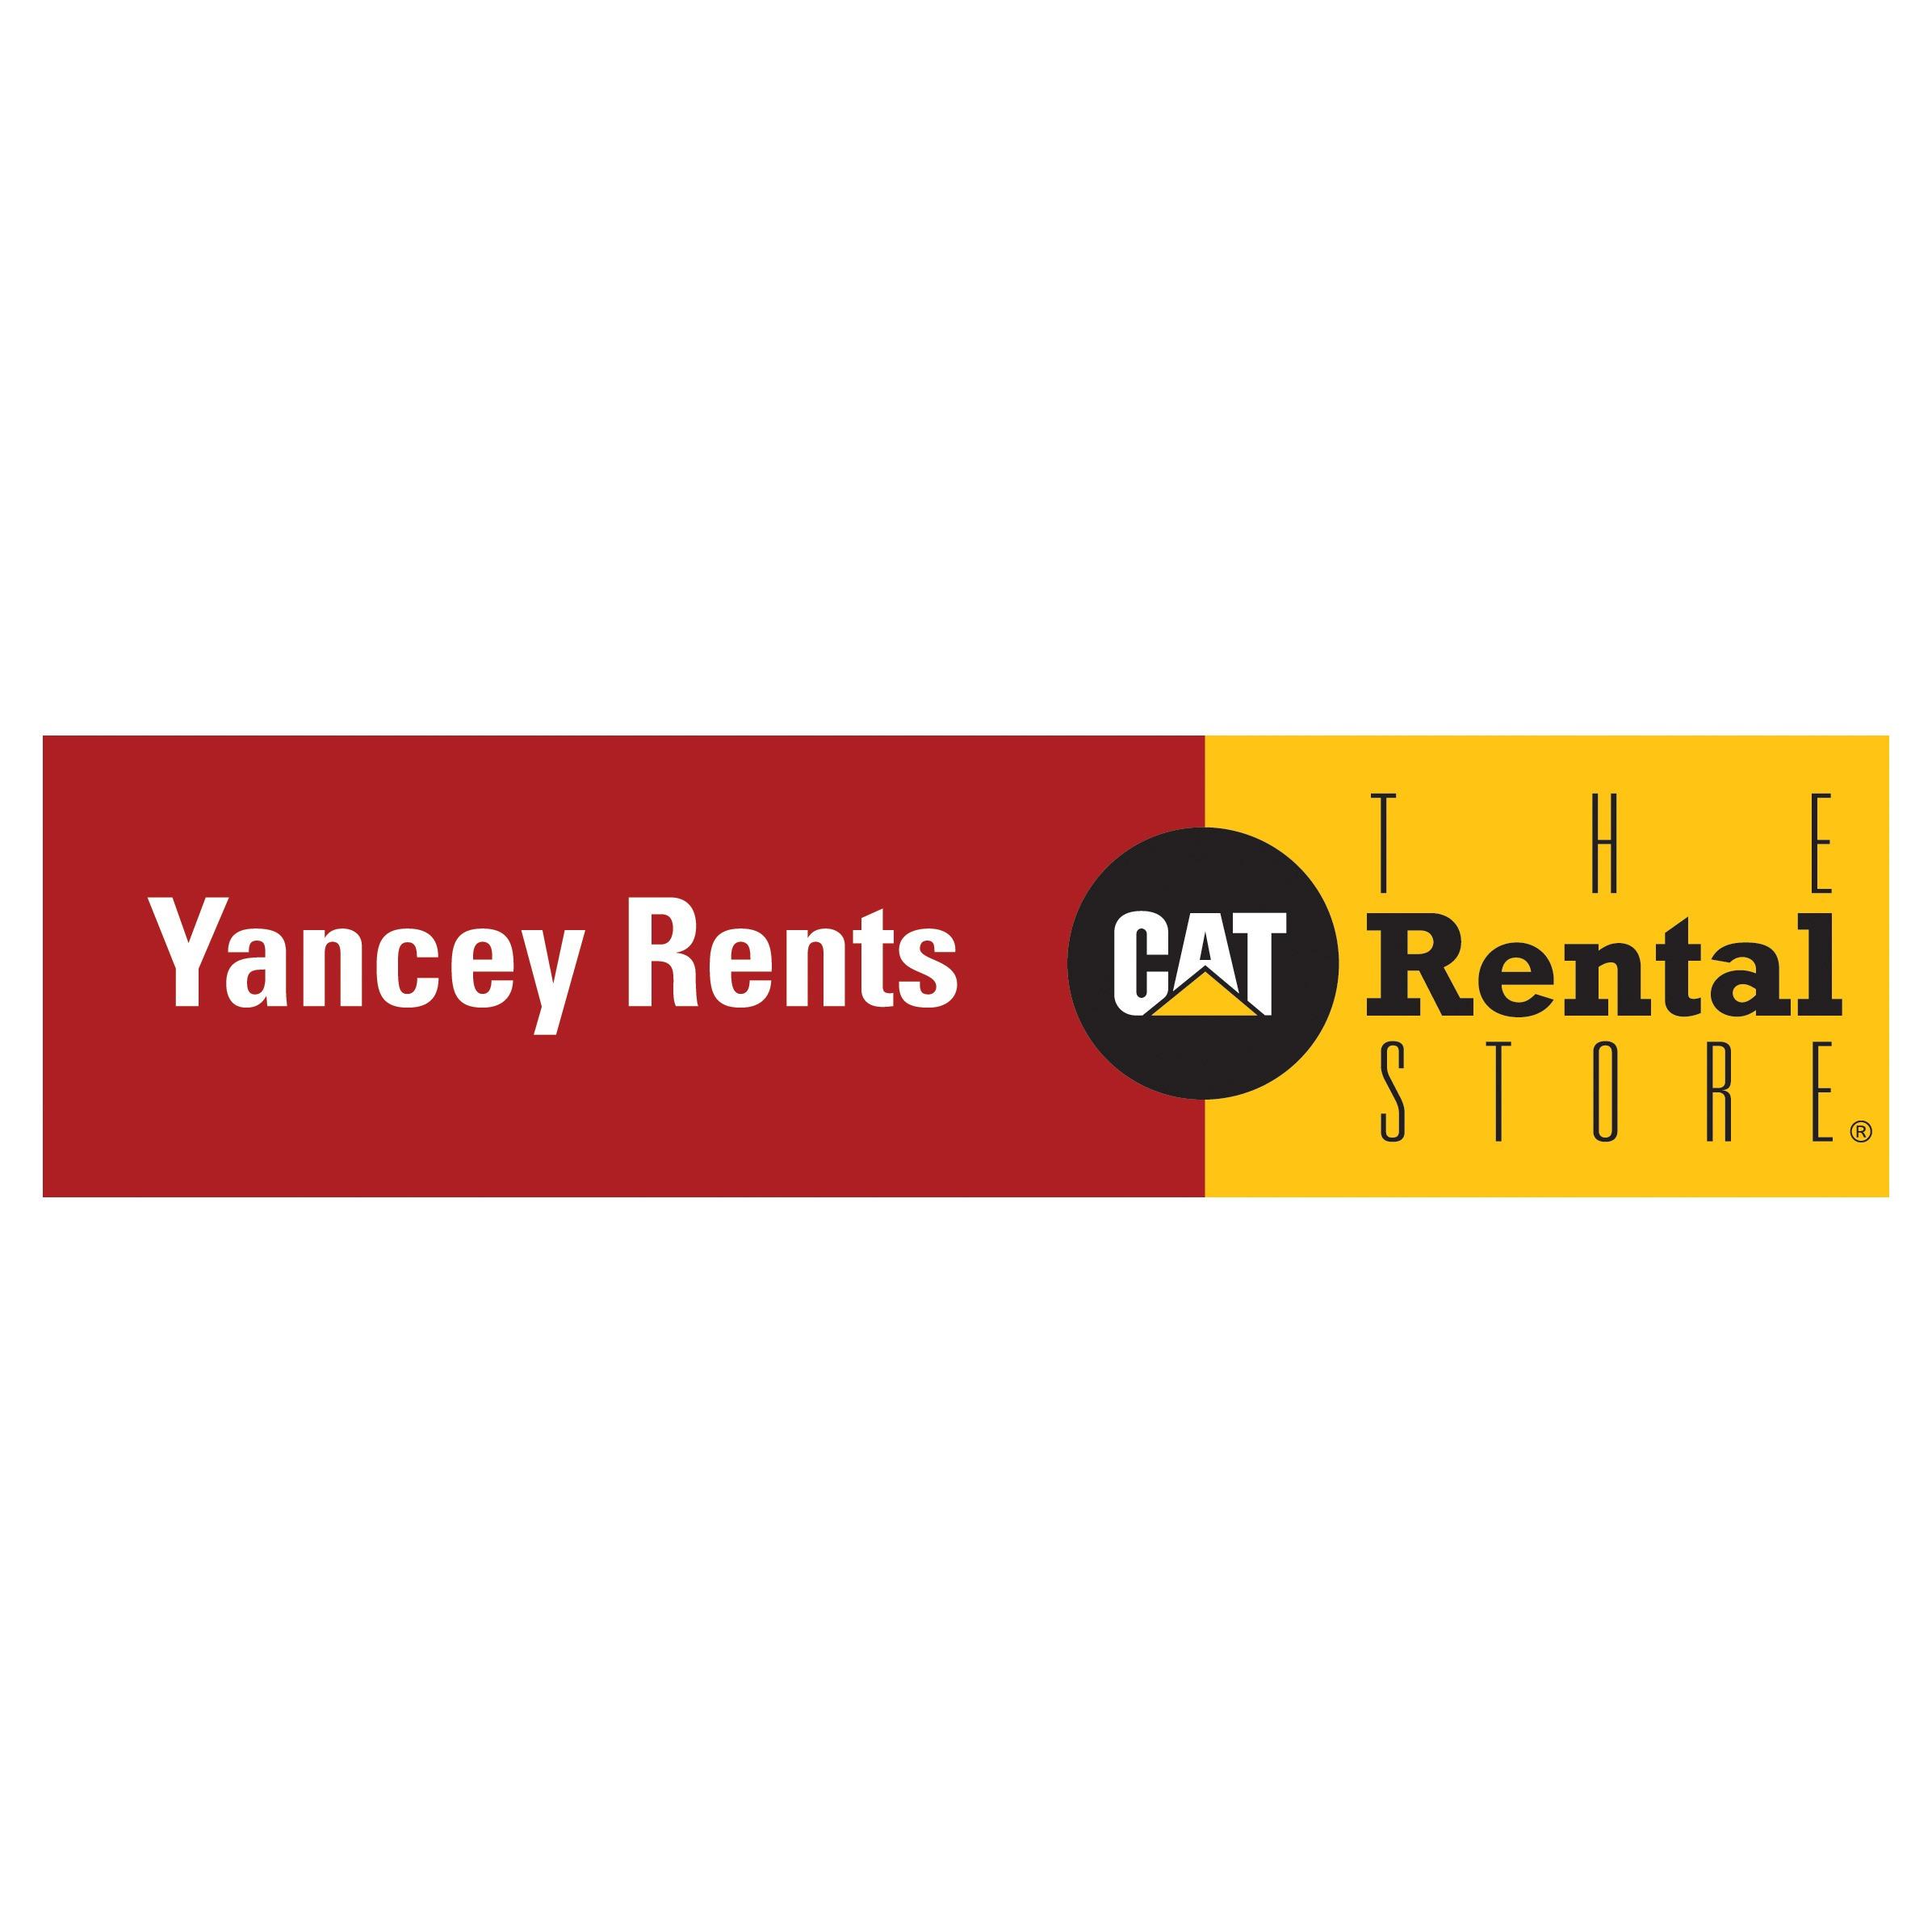 Yancey Rents Cat Rental Store Photo